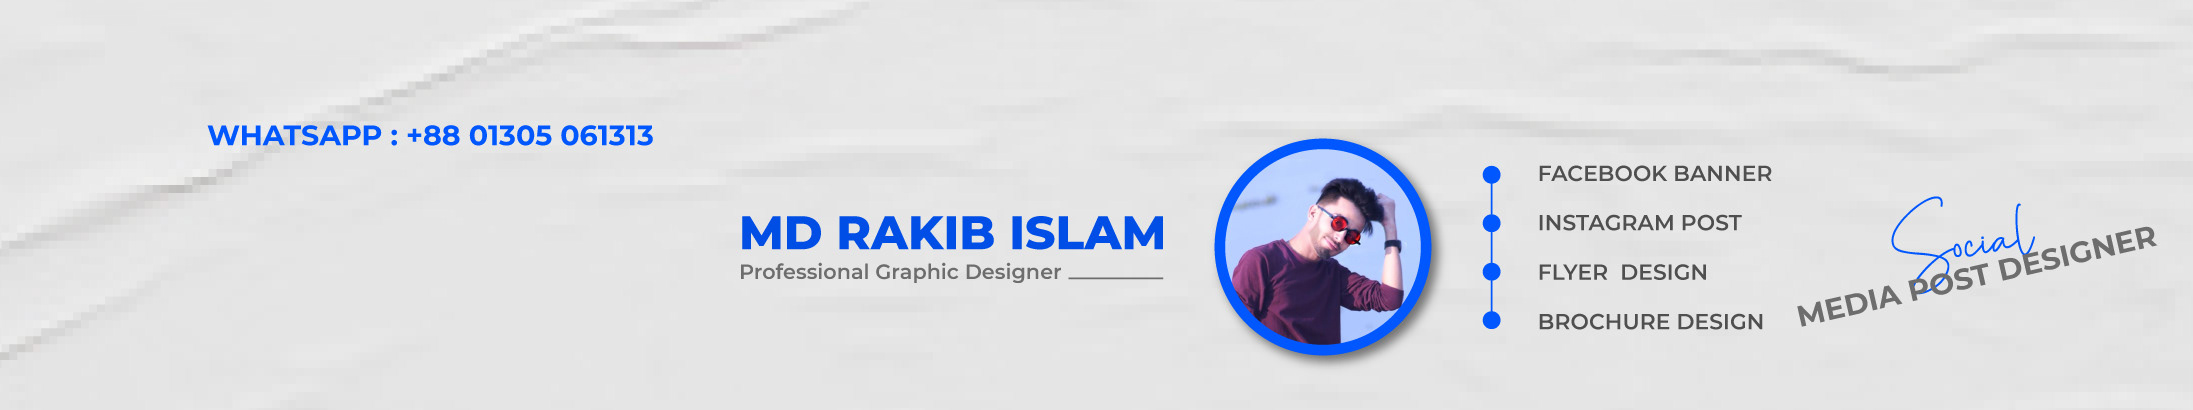 Profil-Banner von Md Rakib Islam